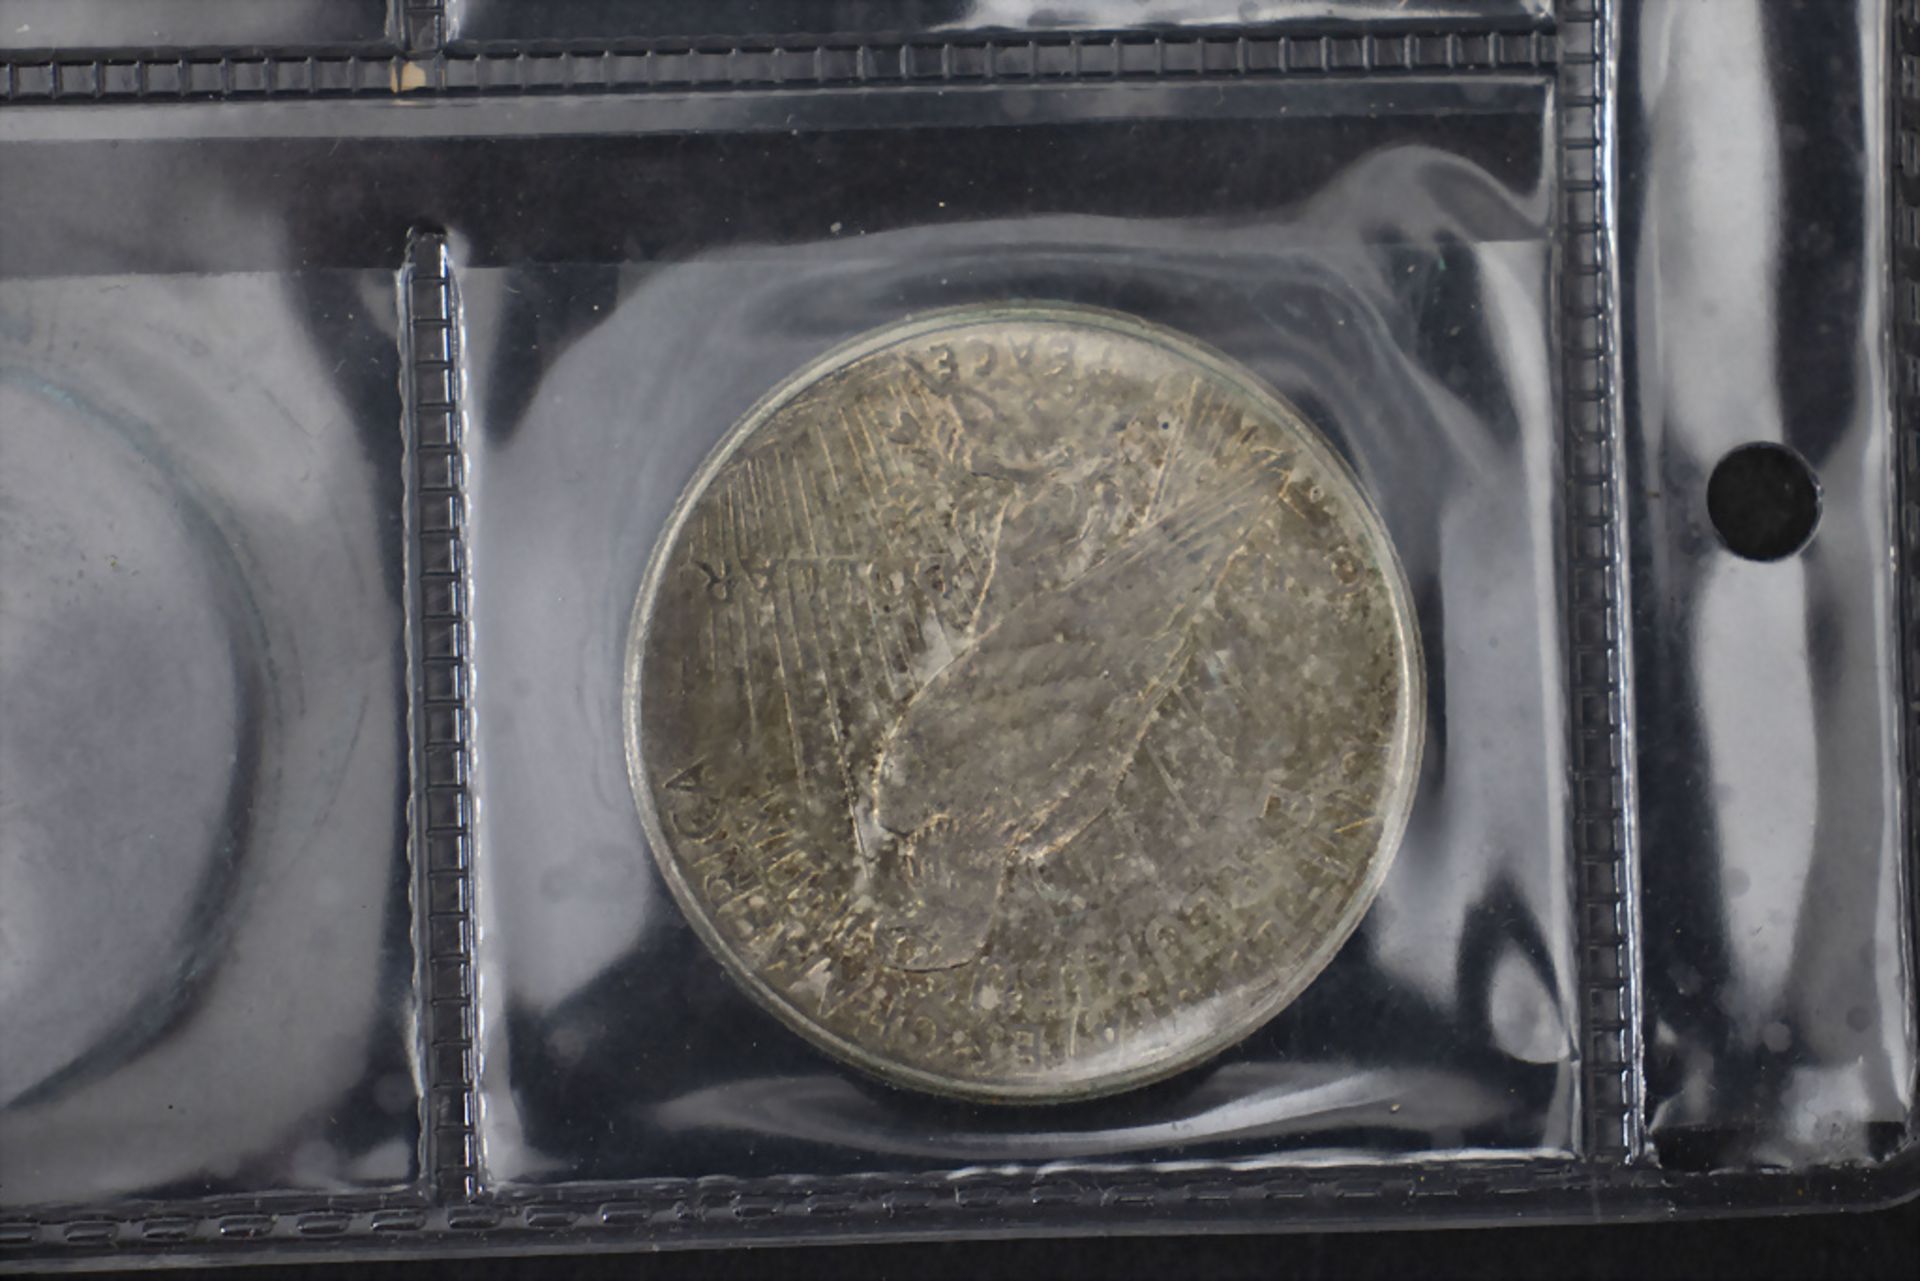 Sammlung Münzen 'USA' / A collection of US coins - Image 9 of 9